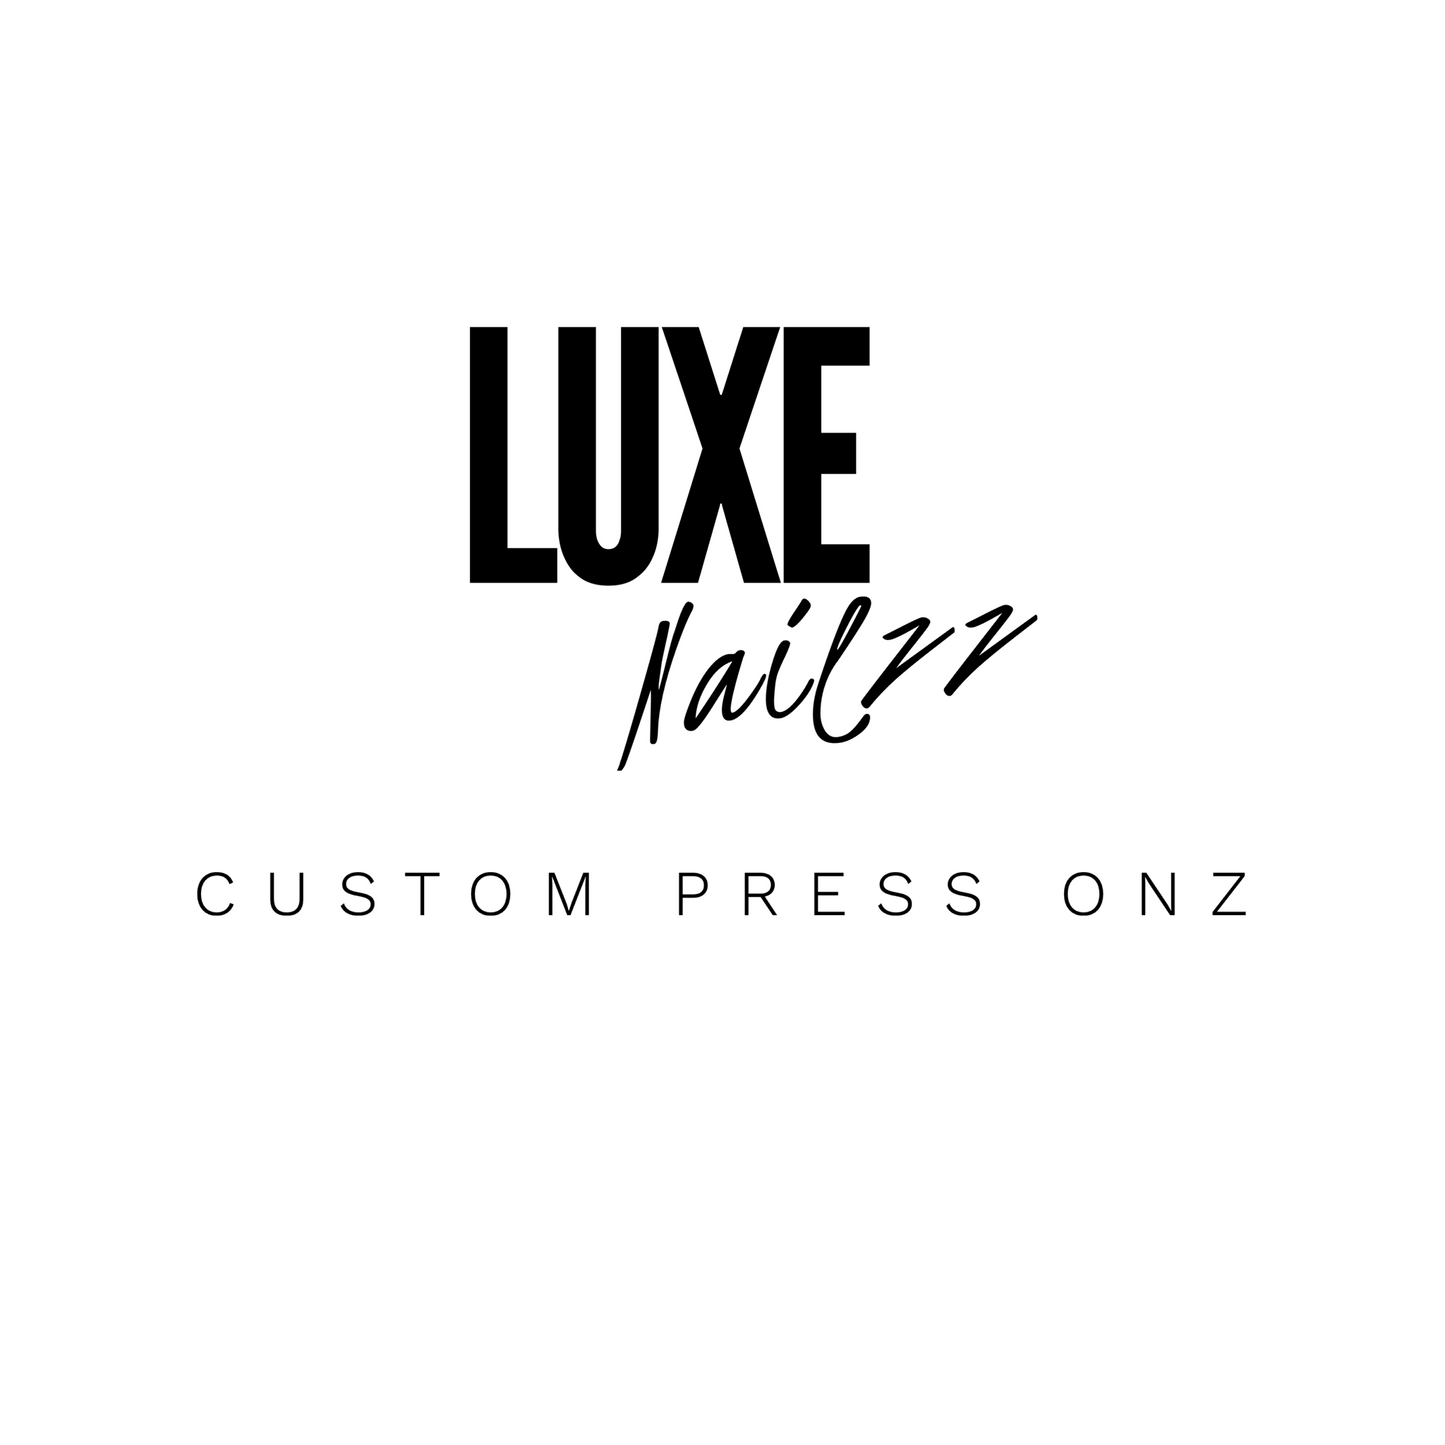 Custom Press Onz